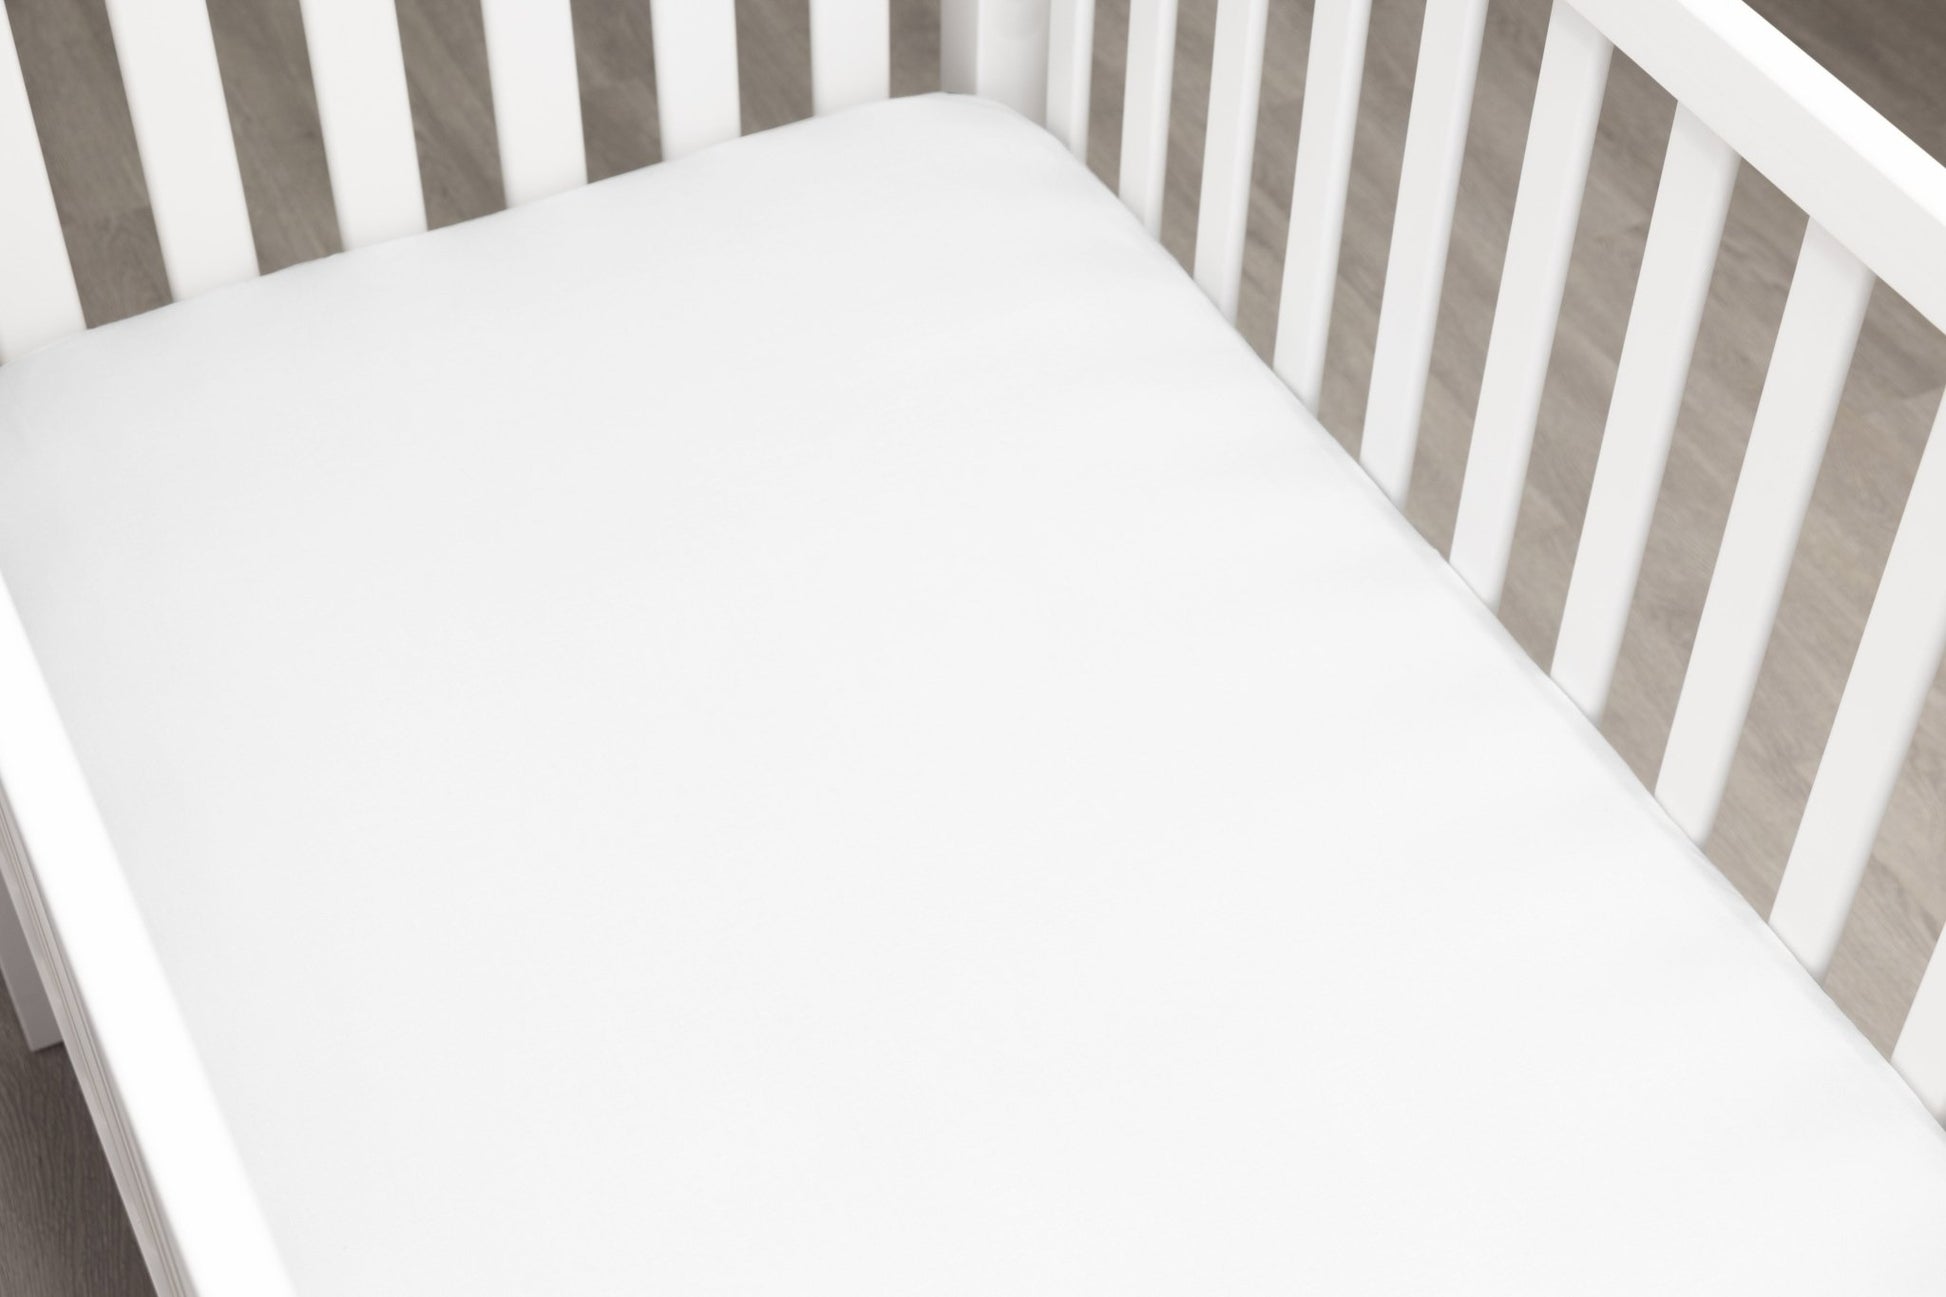 White and Khaki Buffalo Plaid Crib Bedding - 4 Piece Set - New Arrivals Inc